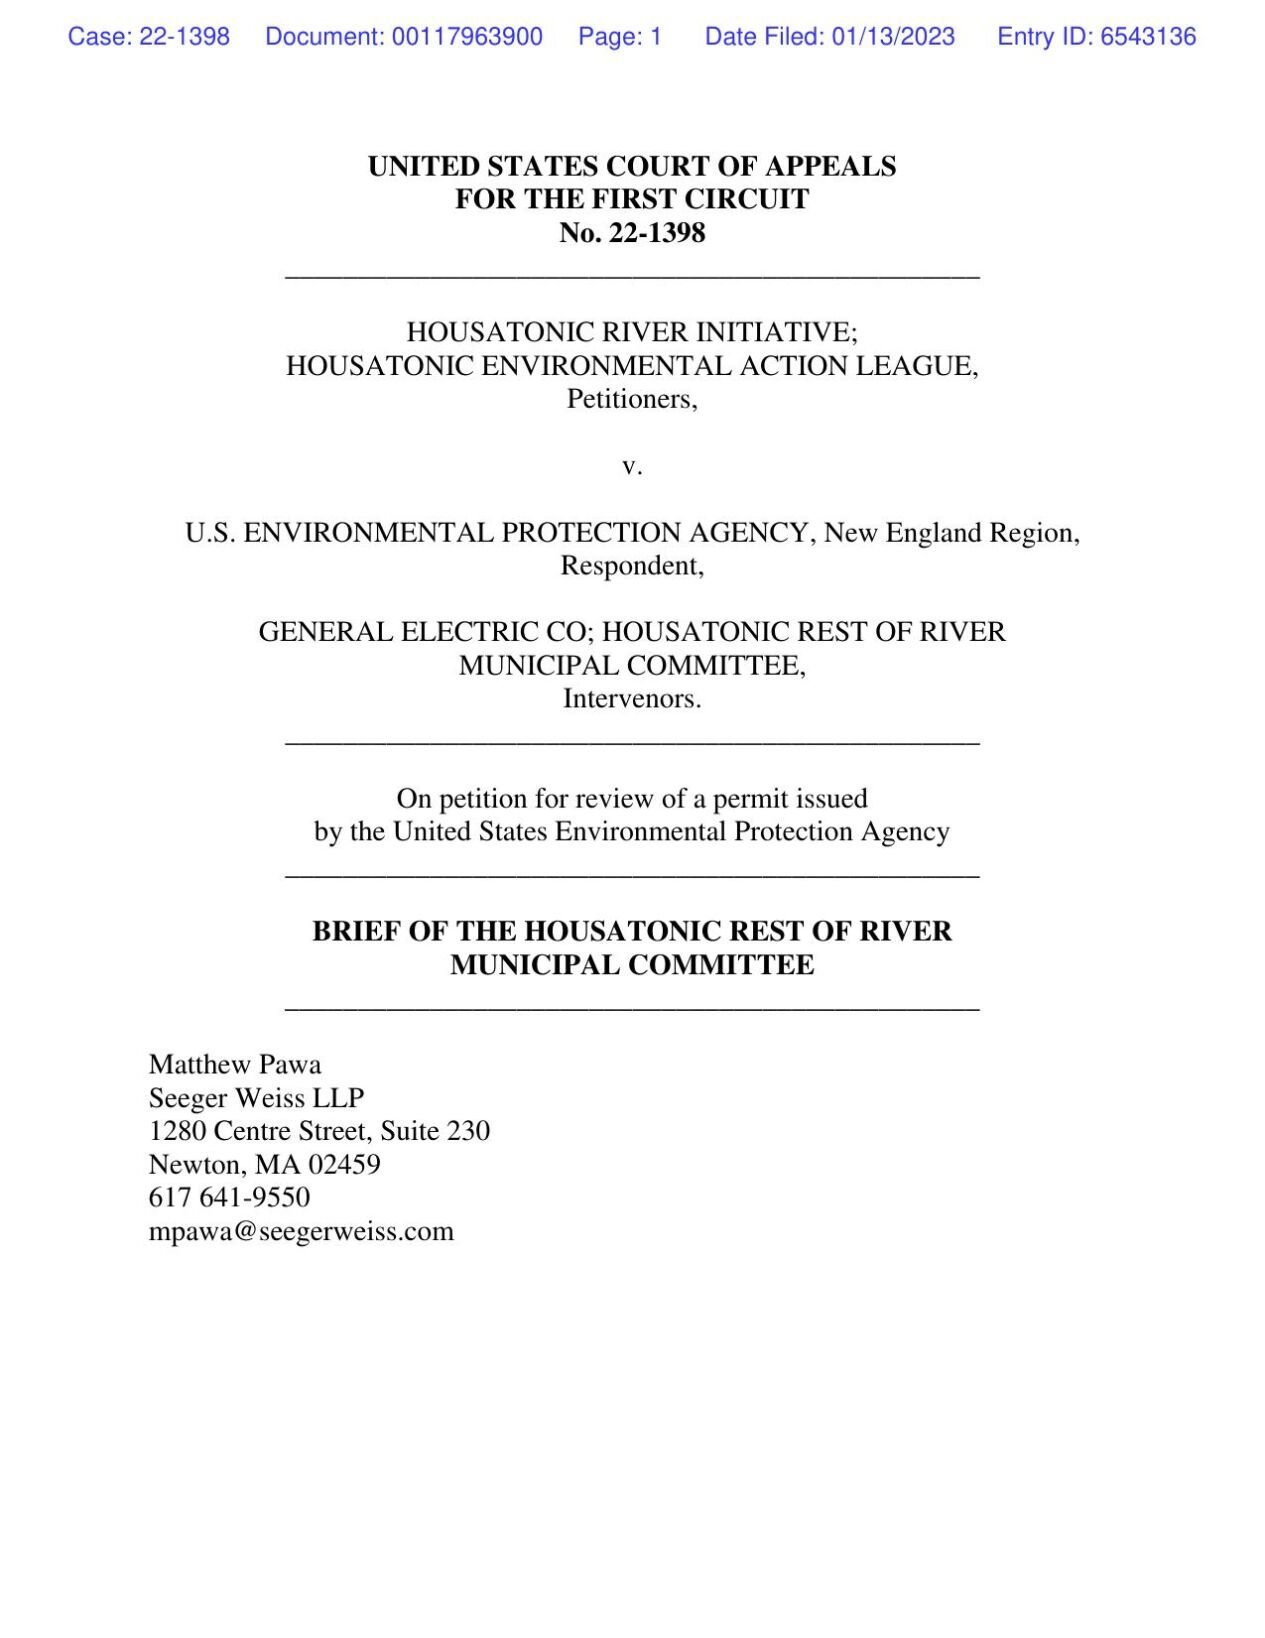 2023.01.13 Committee Brief.pdf